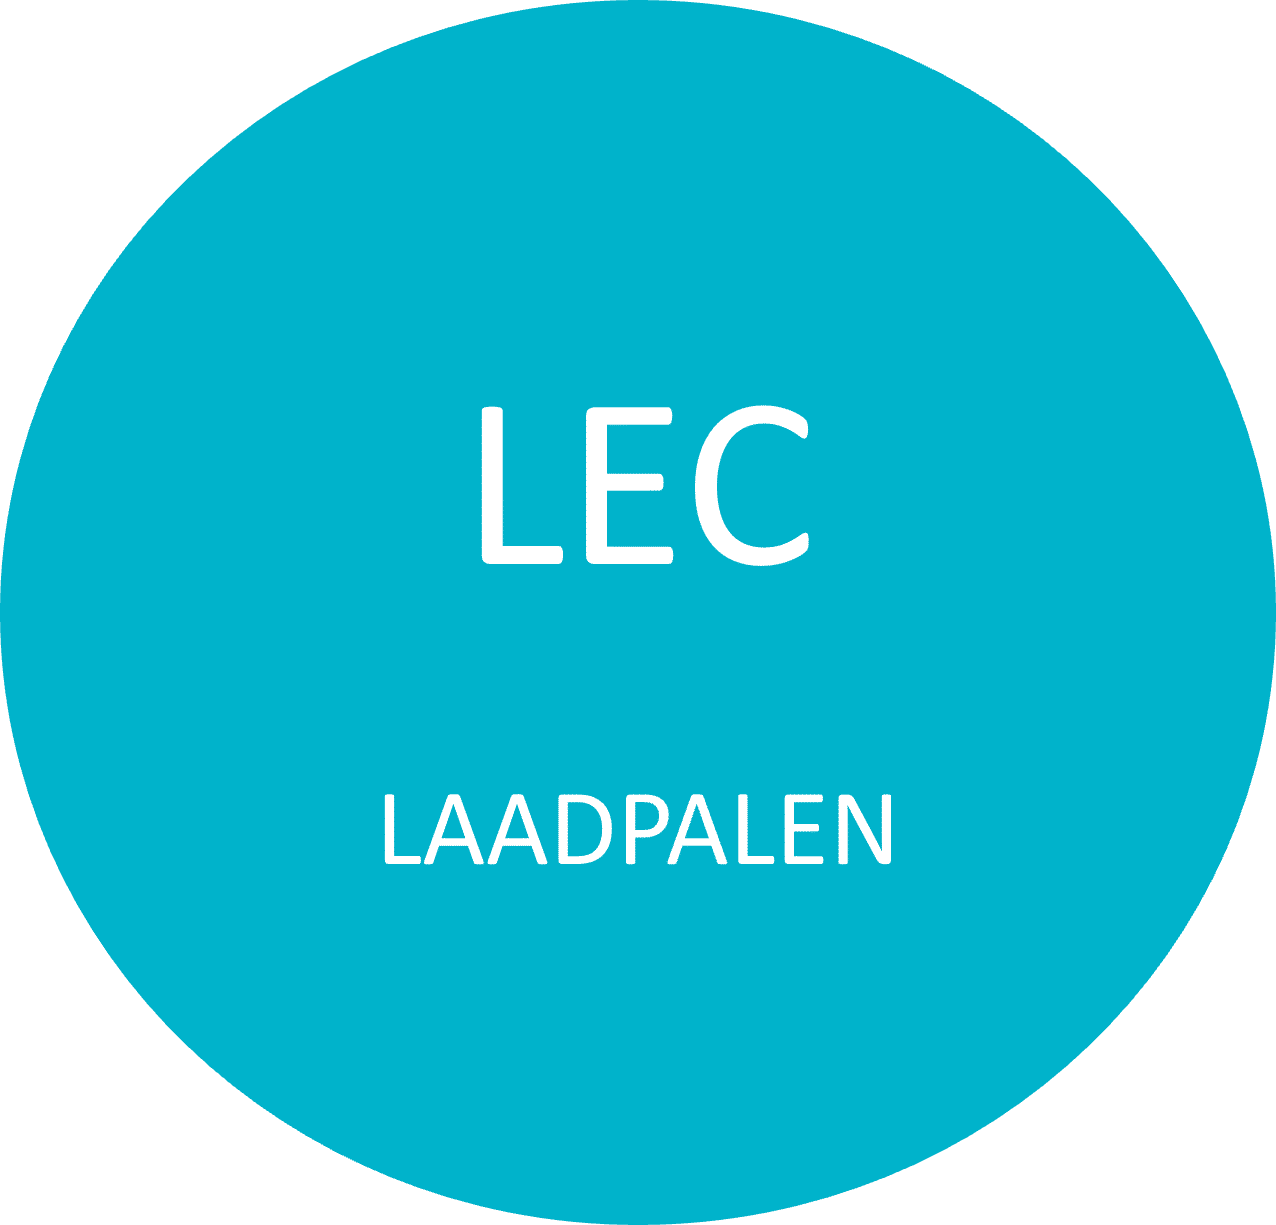 lec energy solutions laadpalen